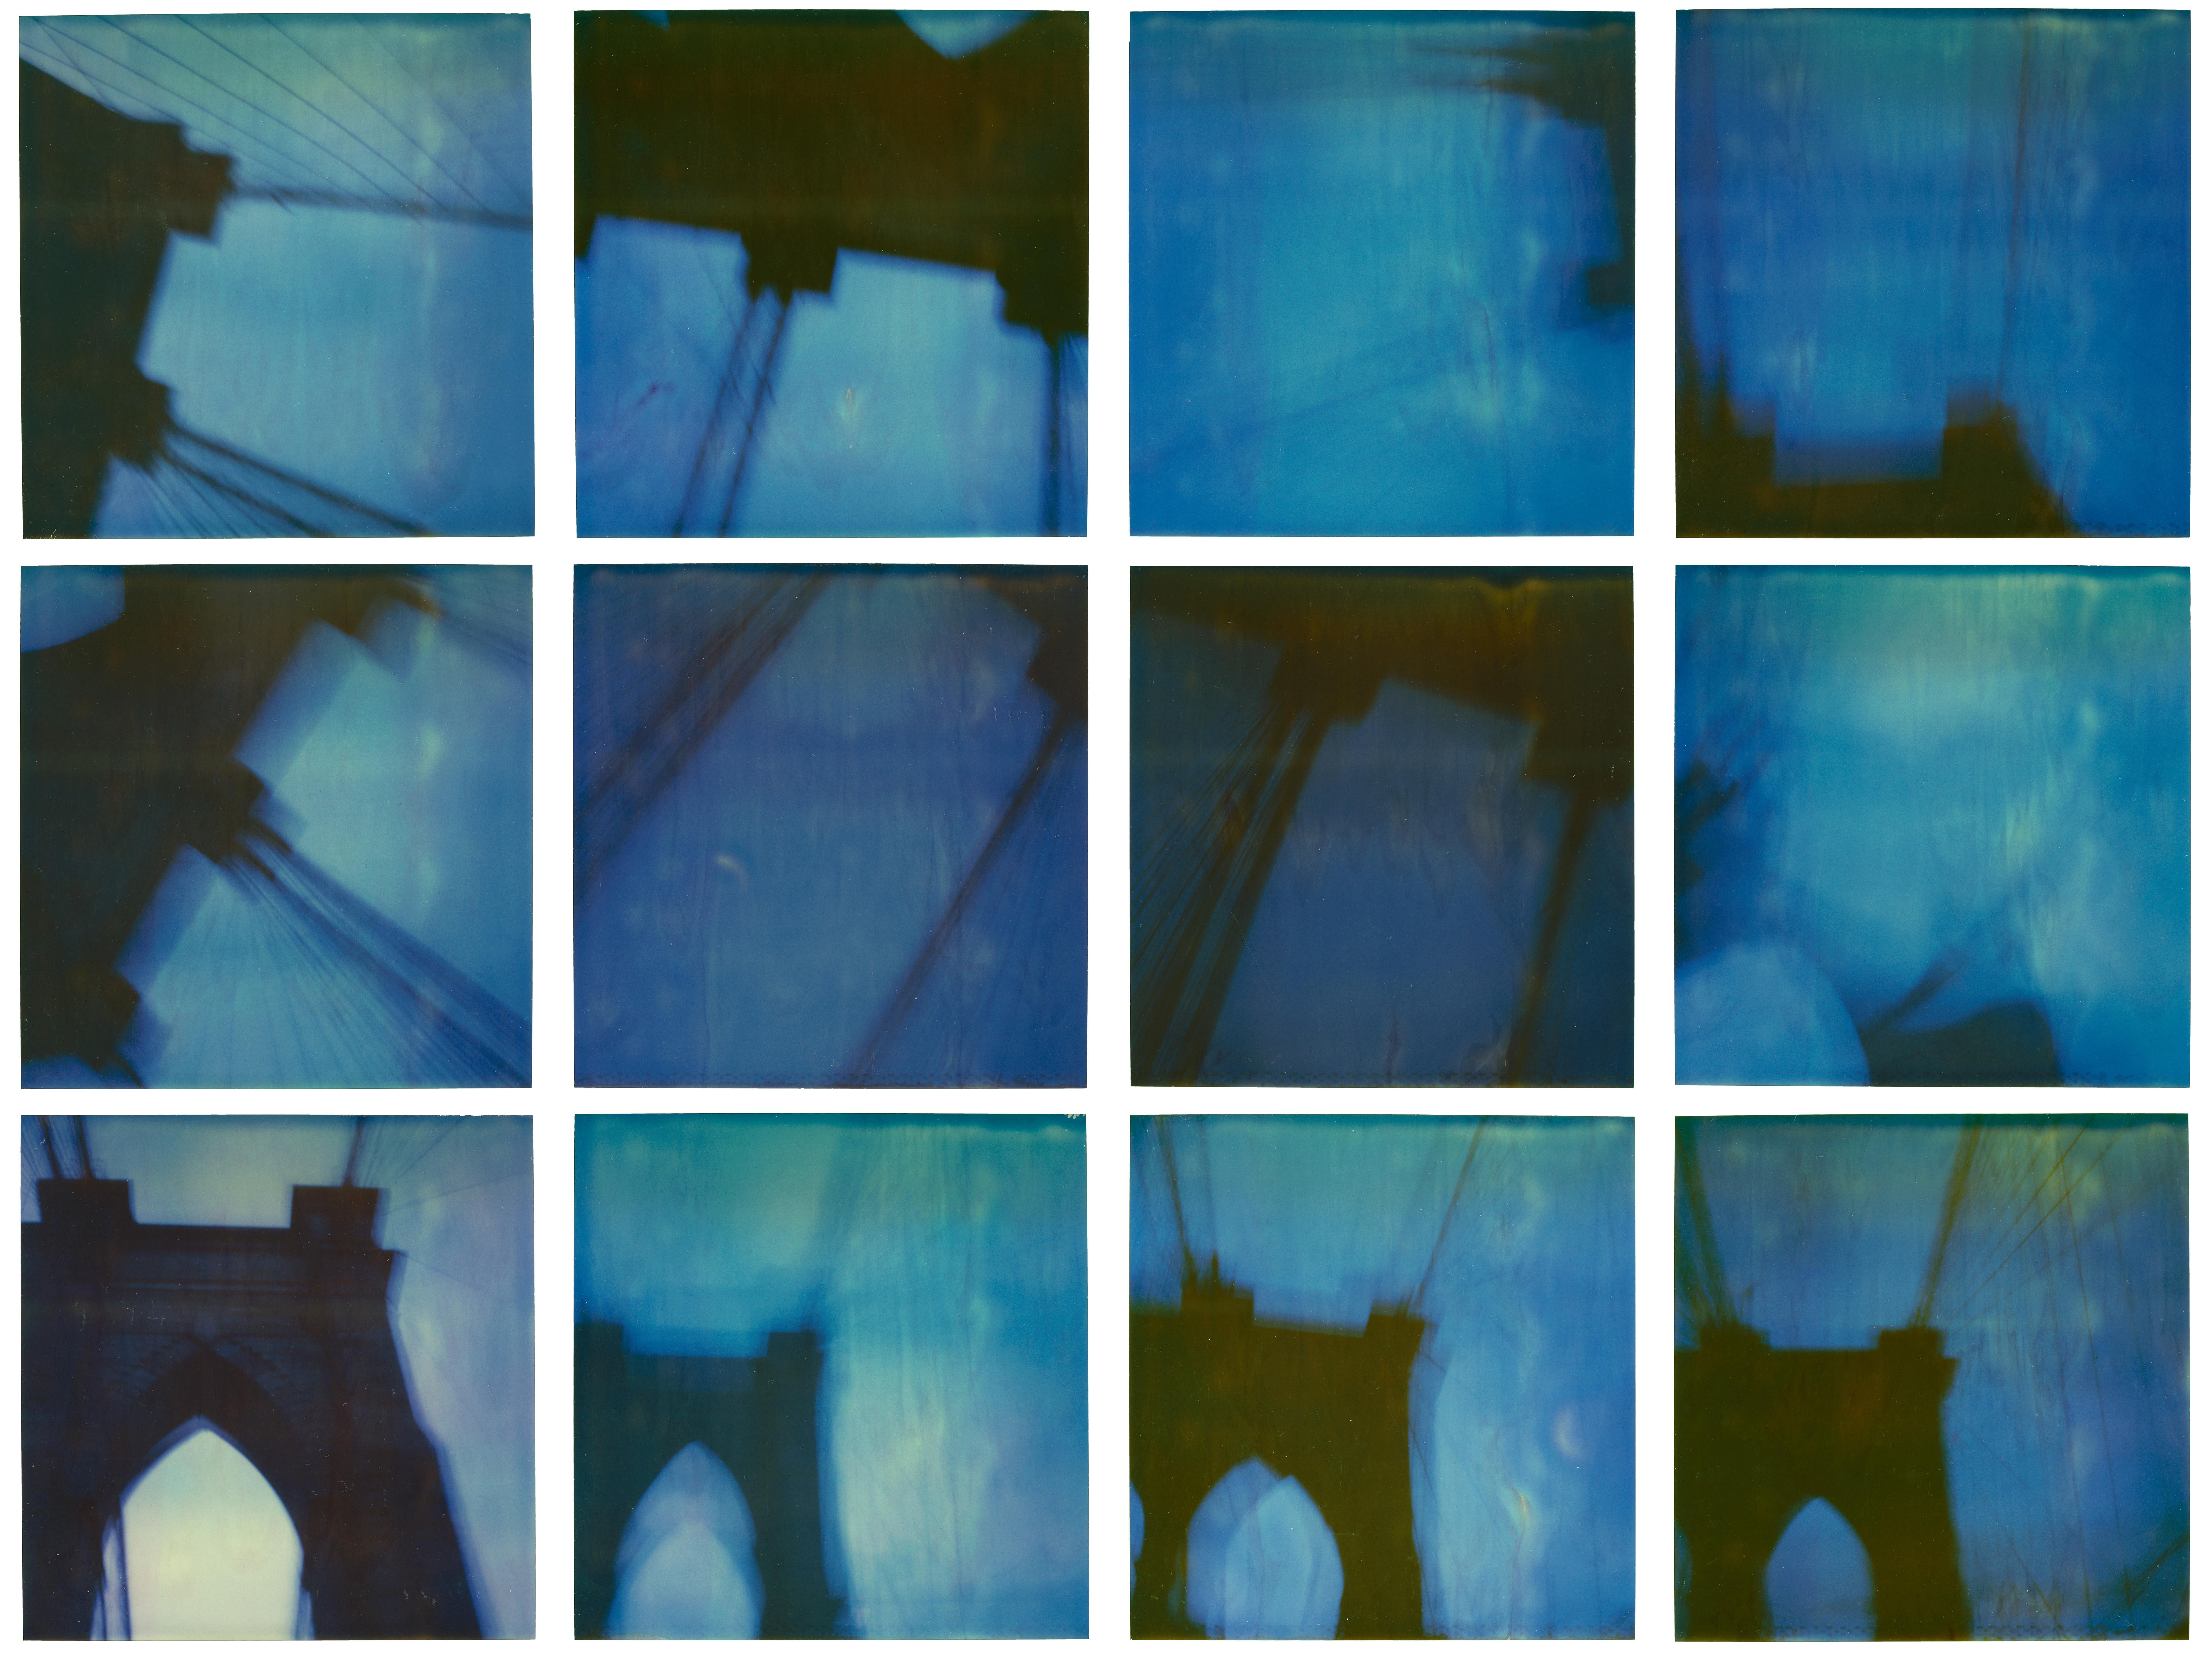 Brooklyn Bridge (Stay) - 21e siècle, Polaroid, couleur, New York, contemporain - Photograph de Stefanie Schneider